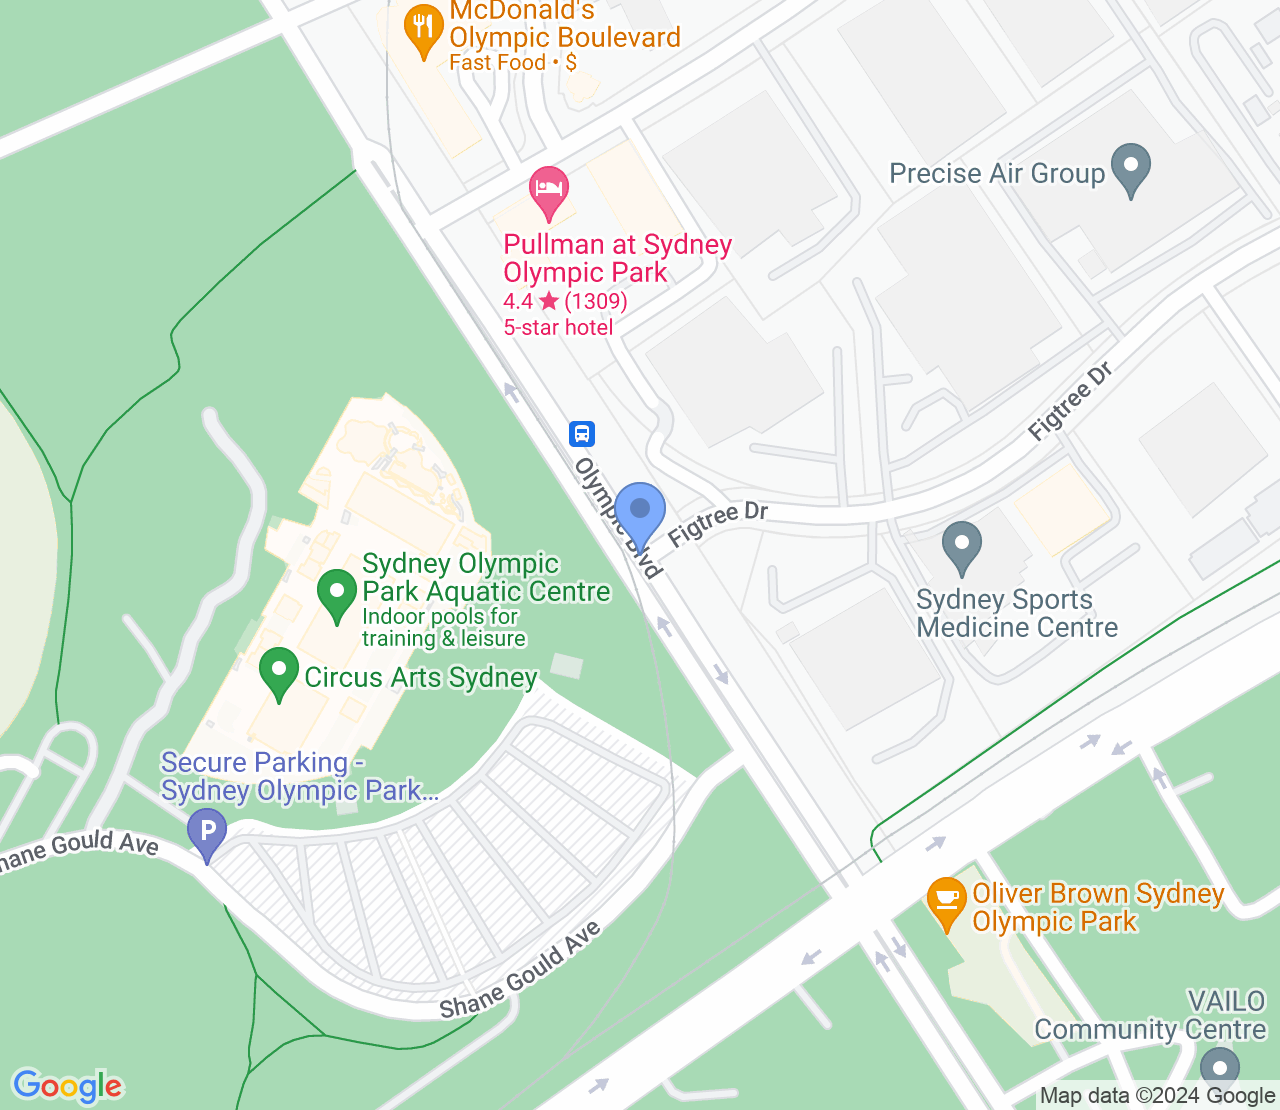 Google Maps image of Sydney Olympic Park Aquatic Centre